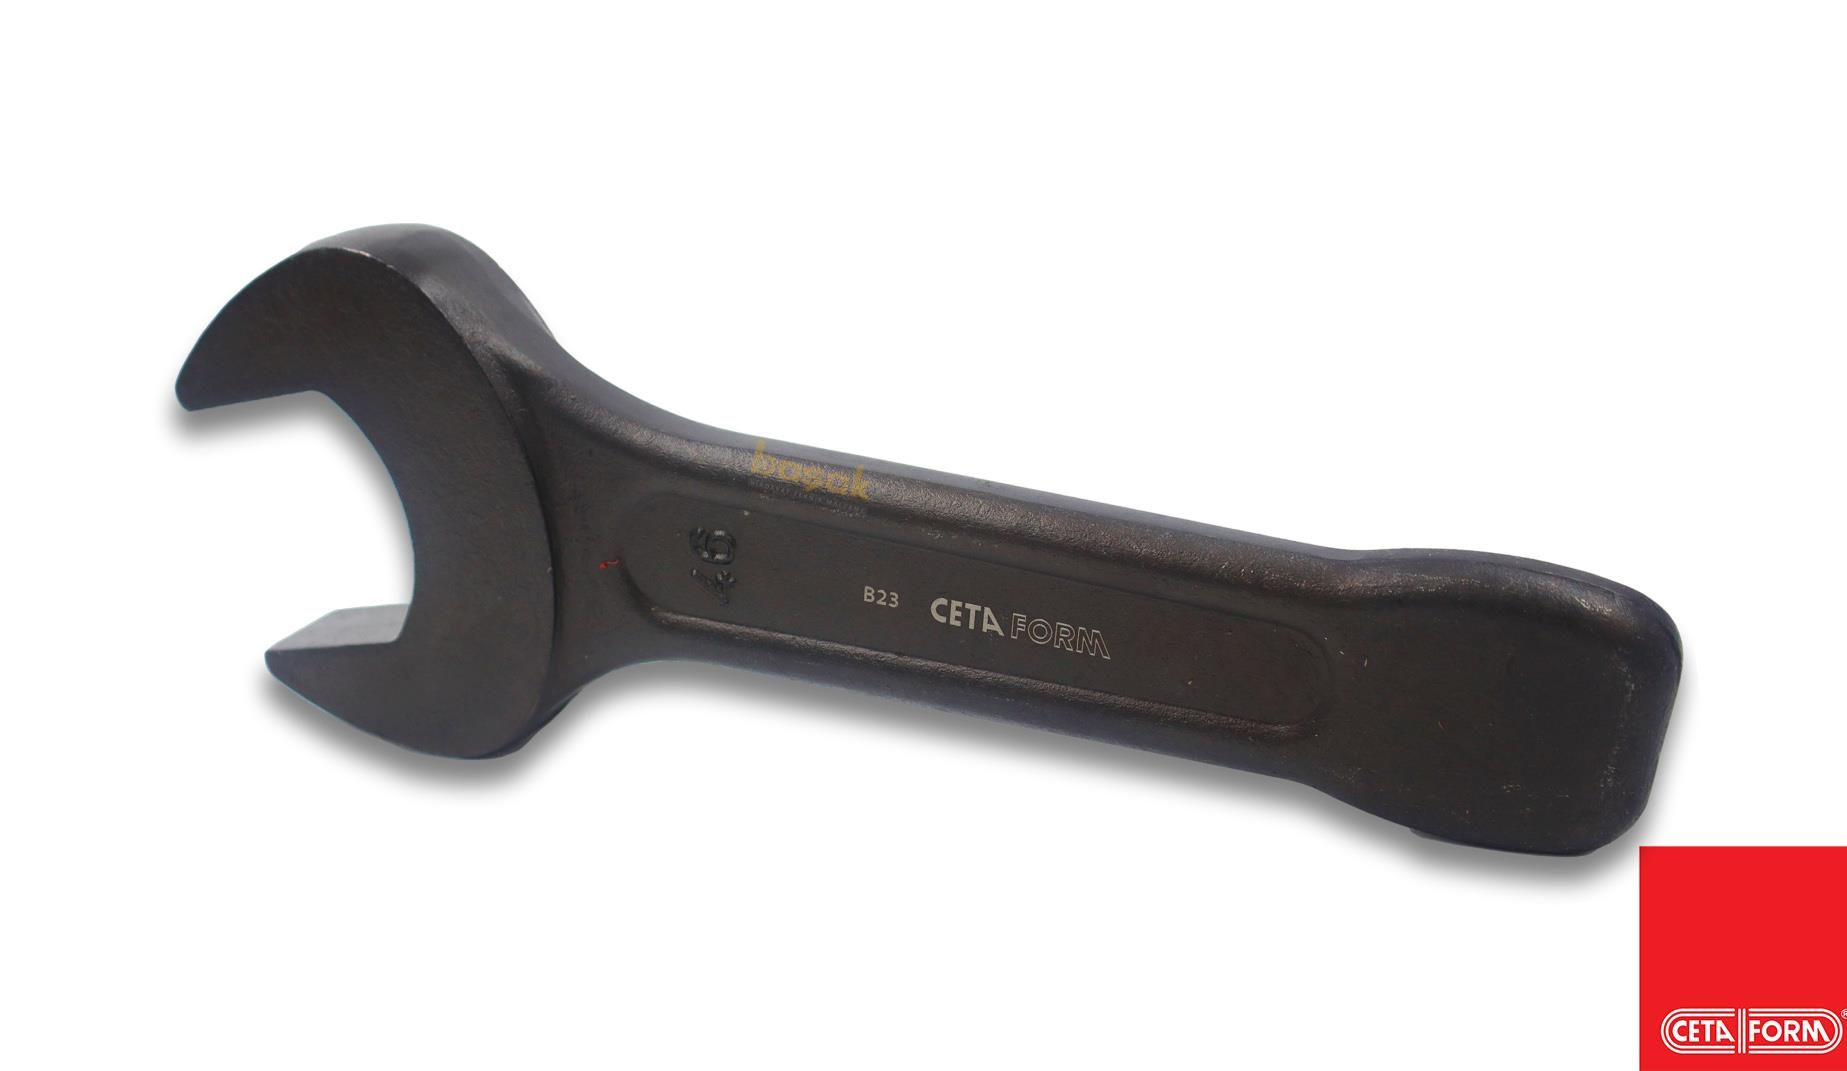 Ceta Form 46 mm Açık Ağız Darbeli (Çakma) Anahtar B23-46